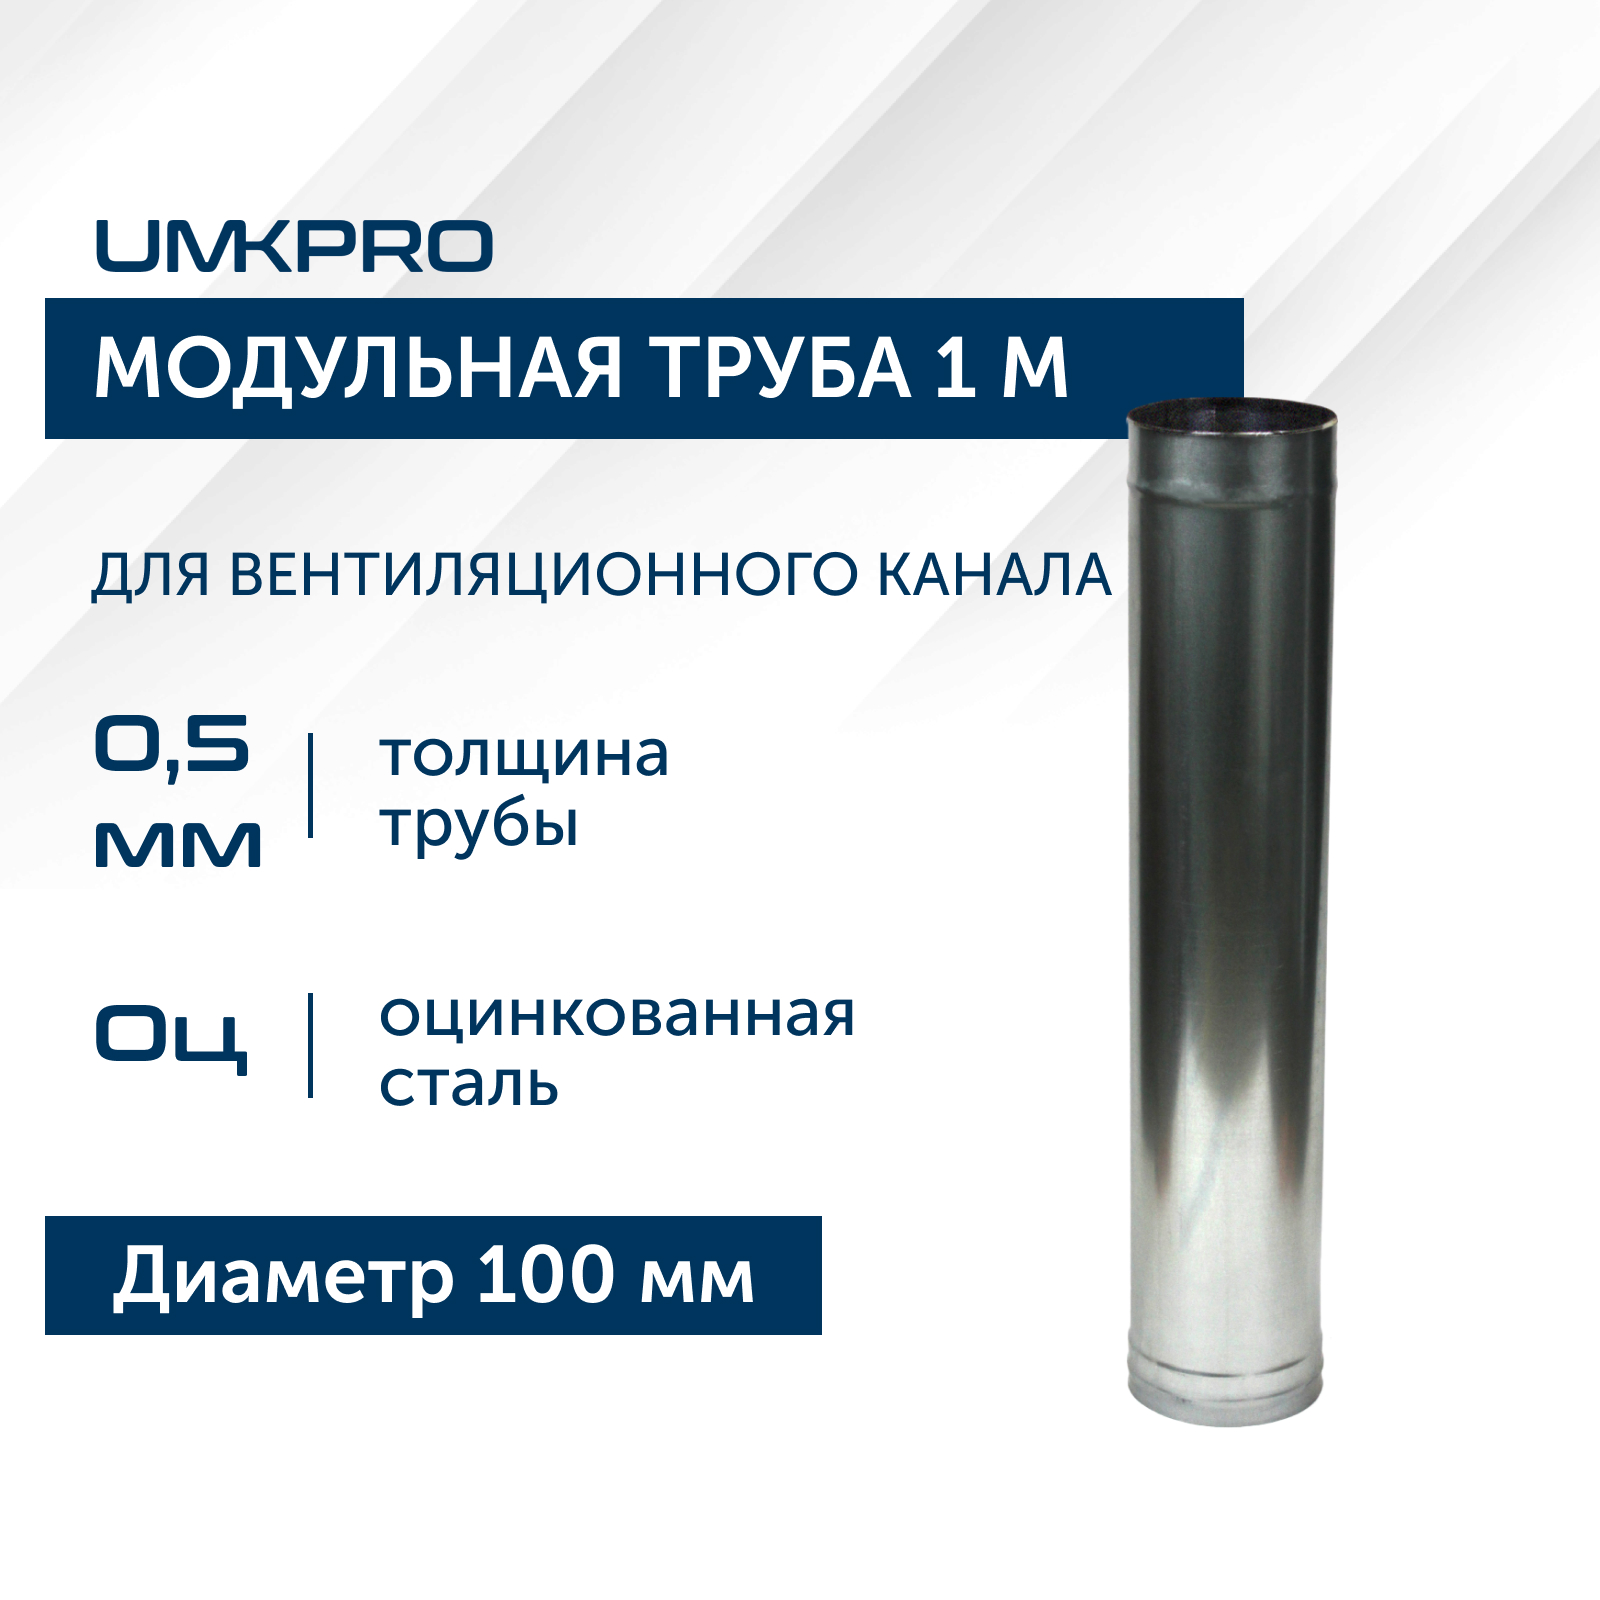 Труба модульная для дымохода 1 м UMKPRO, D 100, Оц/0,5мм модульная прихожая корвет 25